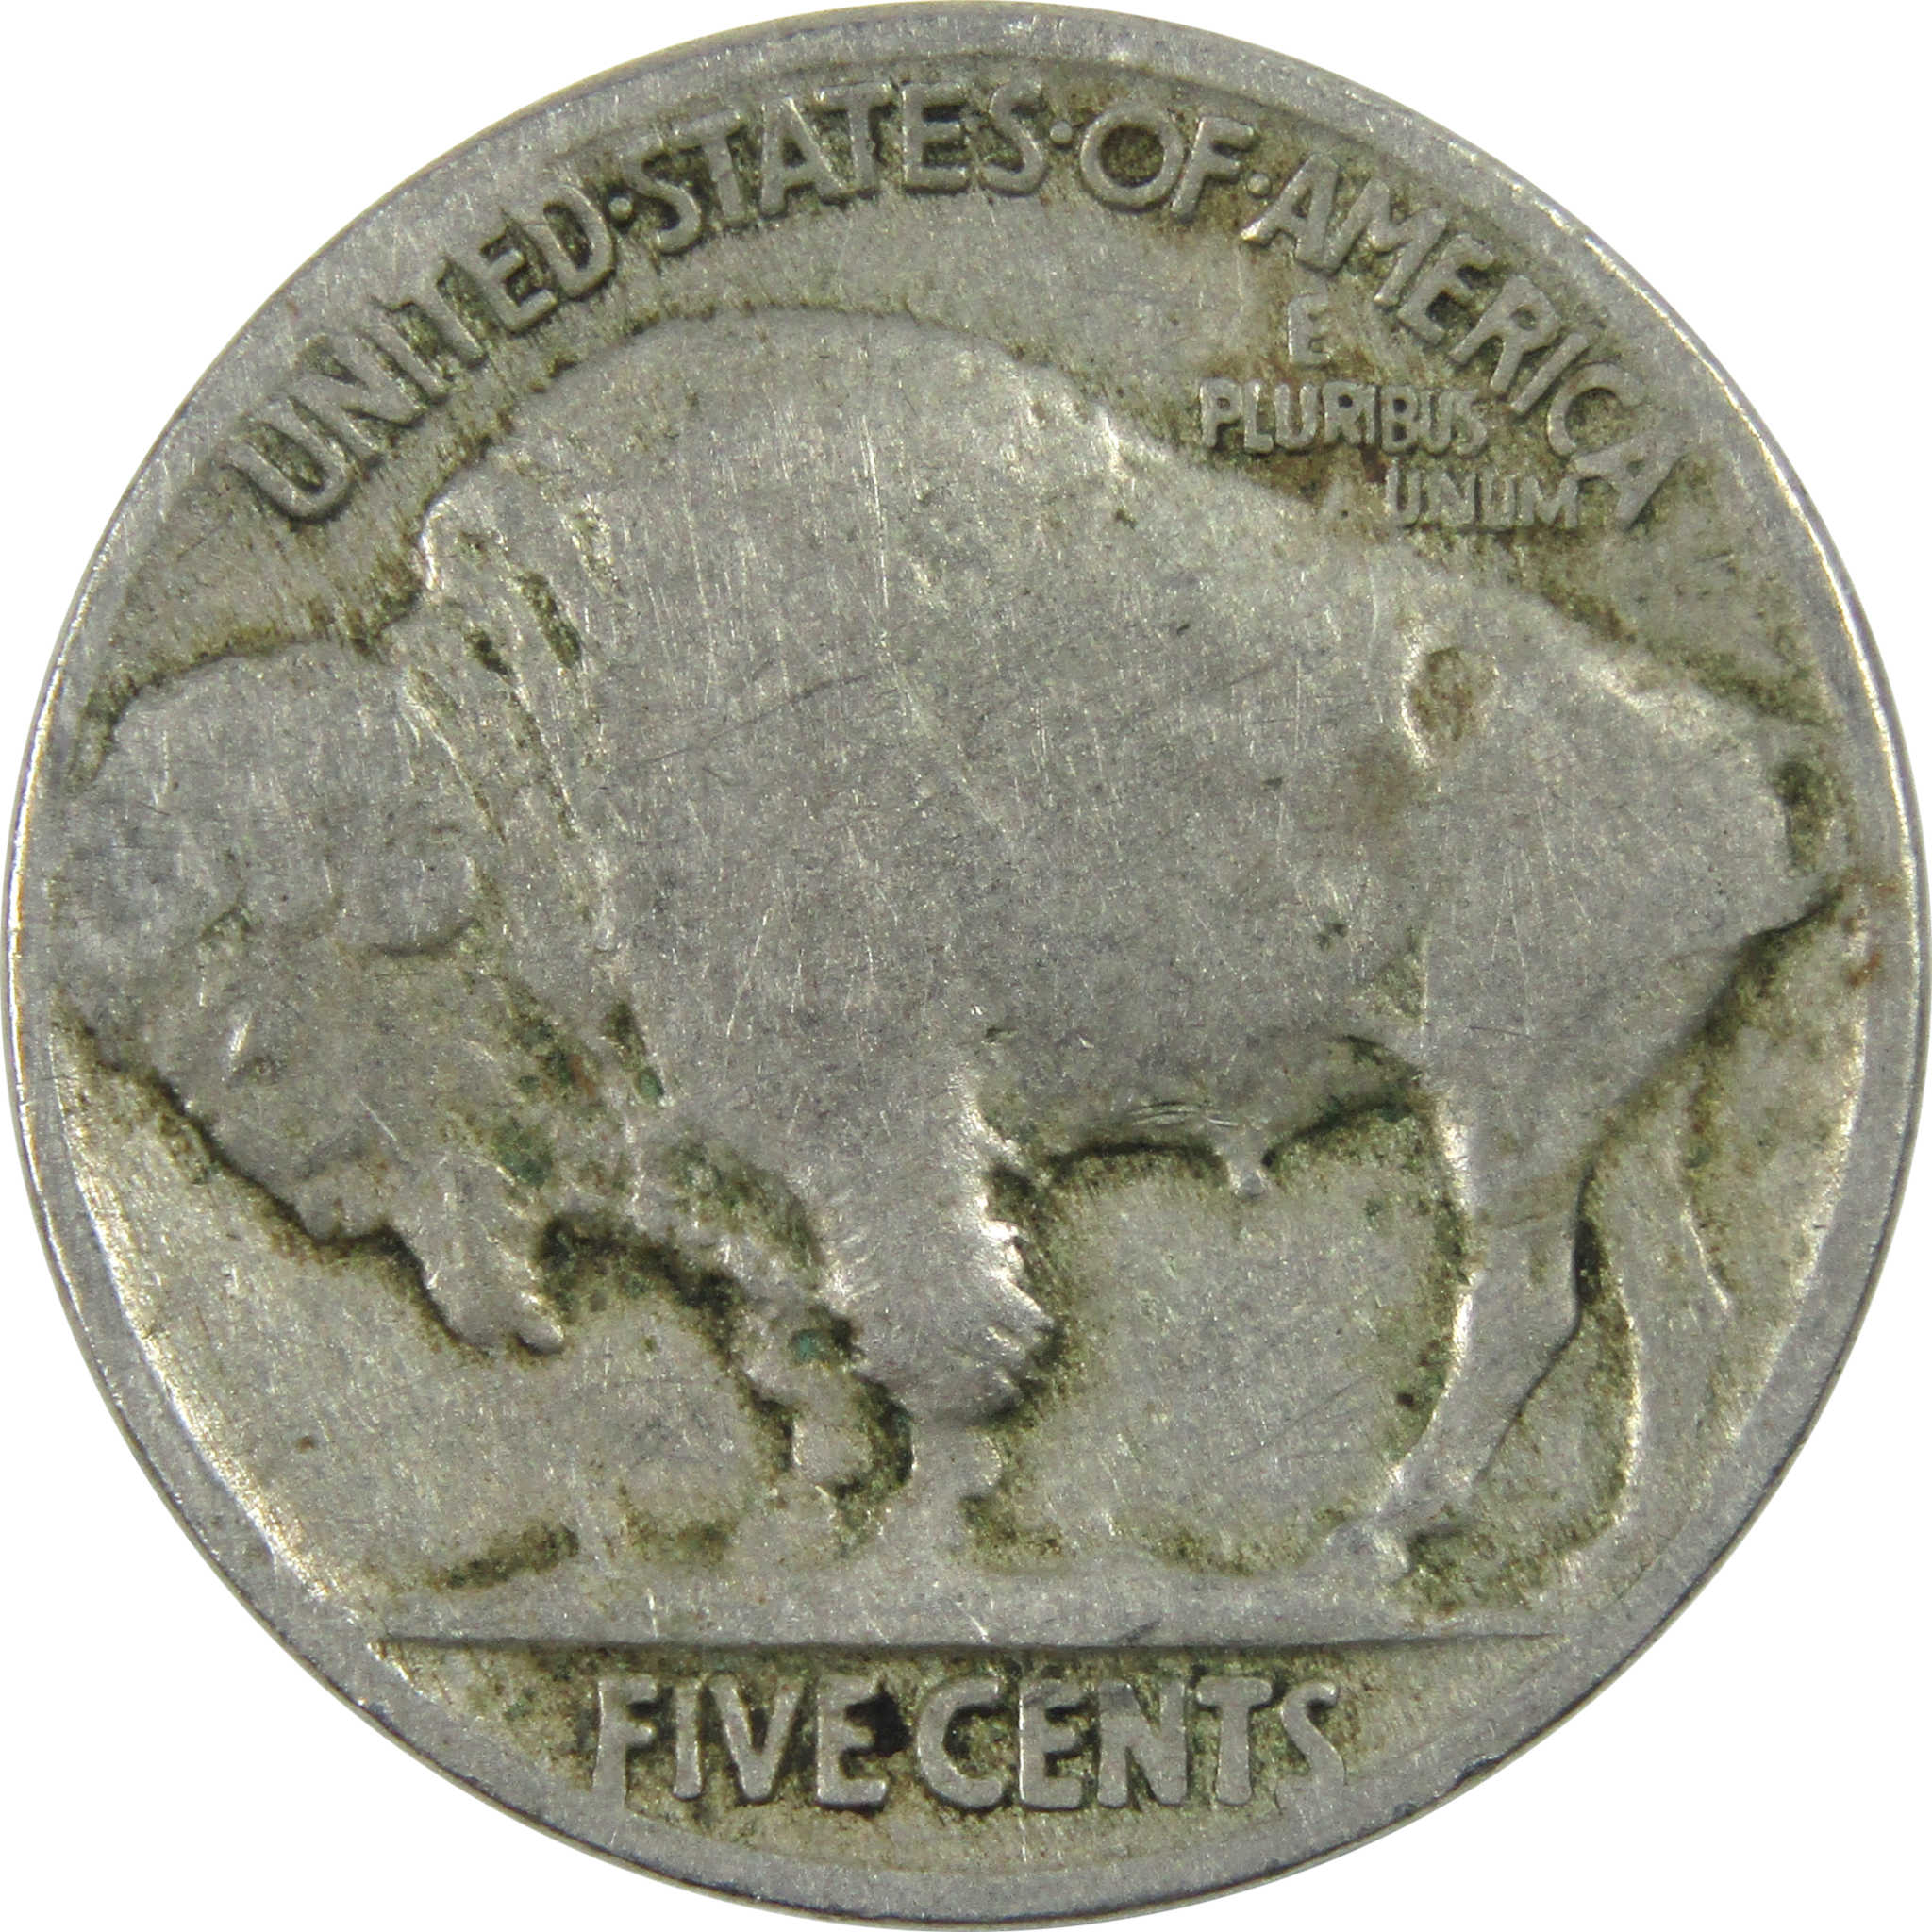 1914 Indian Head Buffalo Nickel AG About Good 5c Coin SKU:I13013